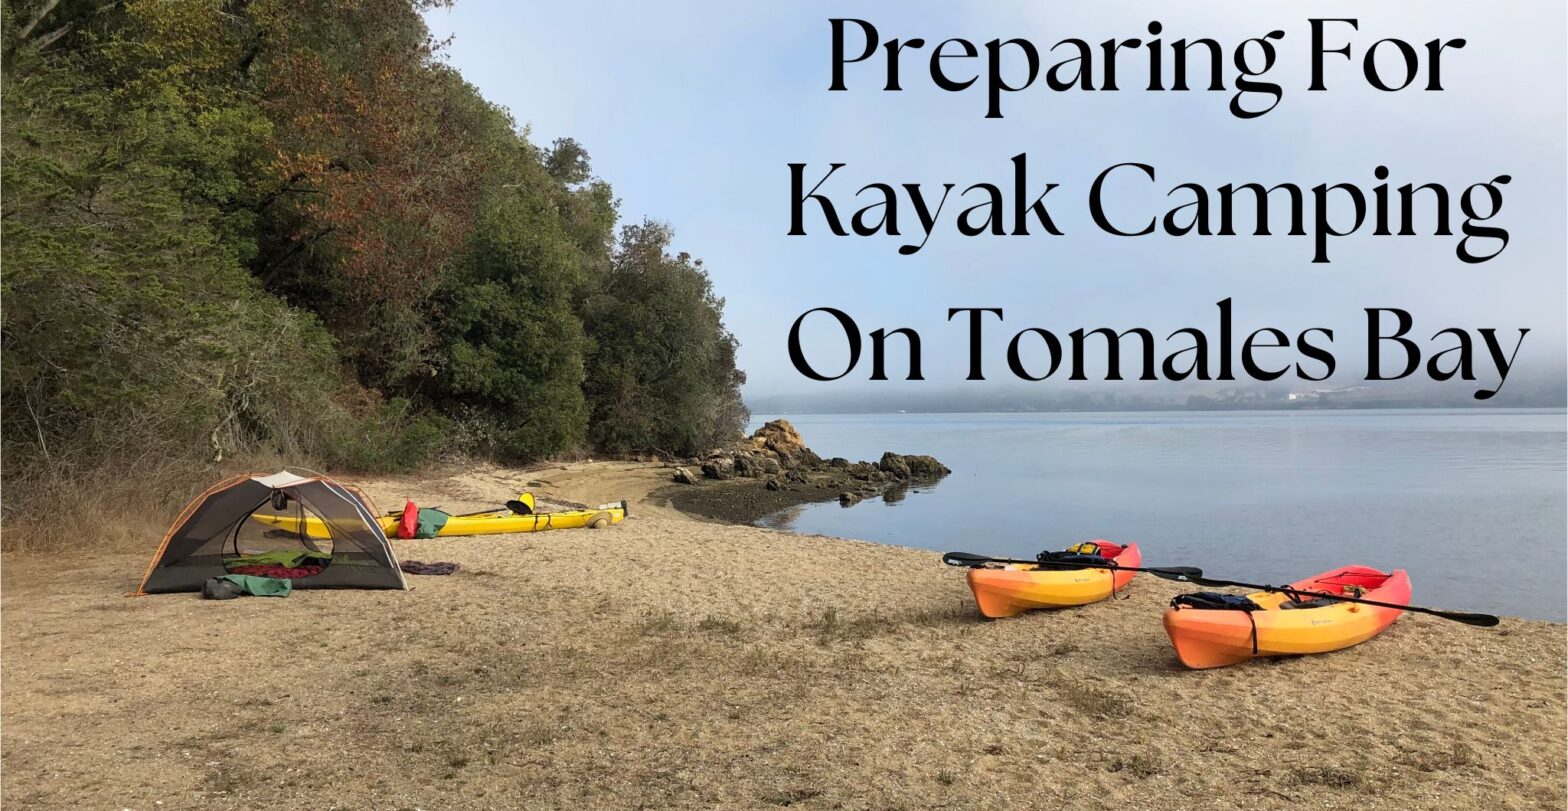 https://www.bluewaterskayaking.com/wp-content/uploads/Preparing-For-Kayak-Camping-On-Tomales-Bay-1568x811.jpg